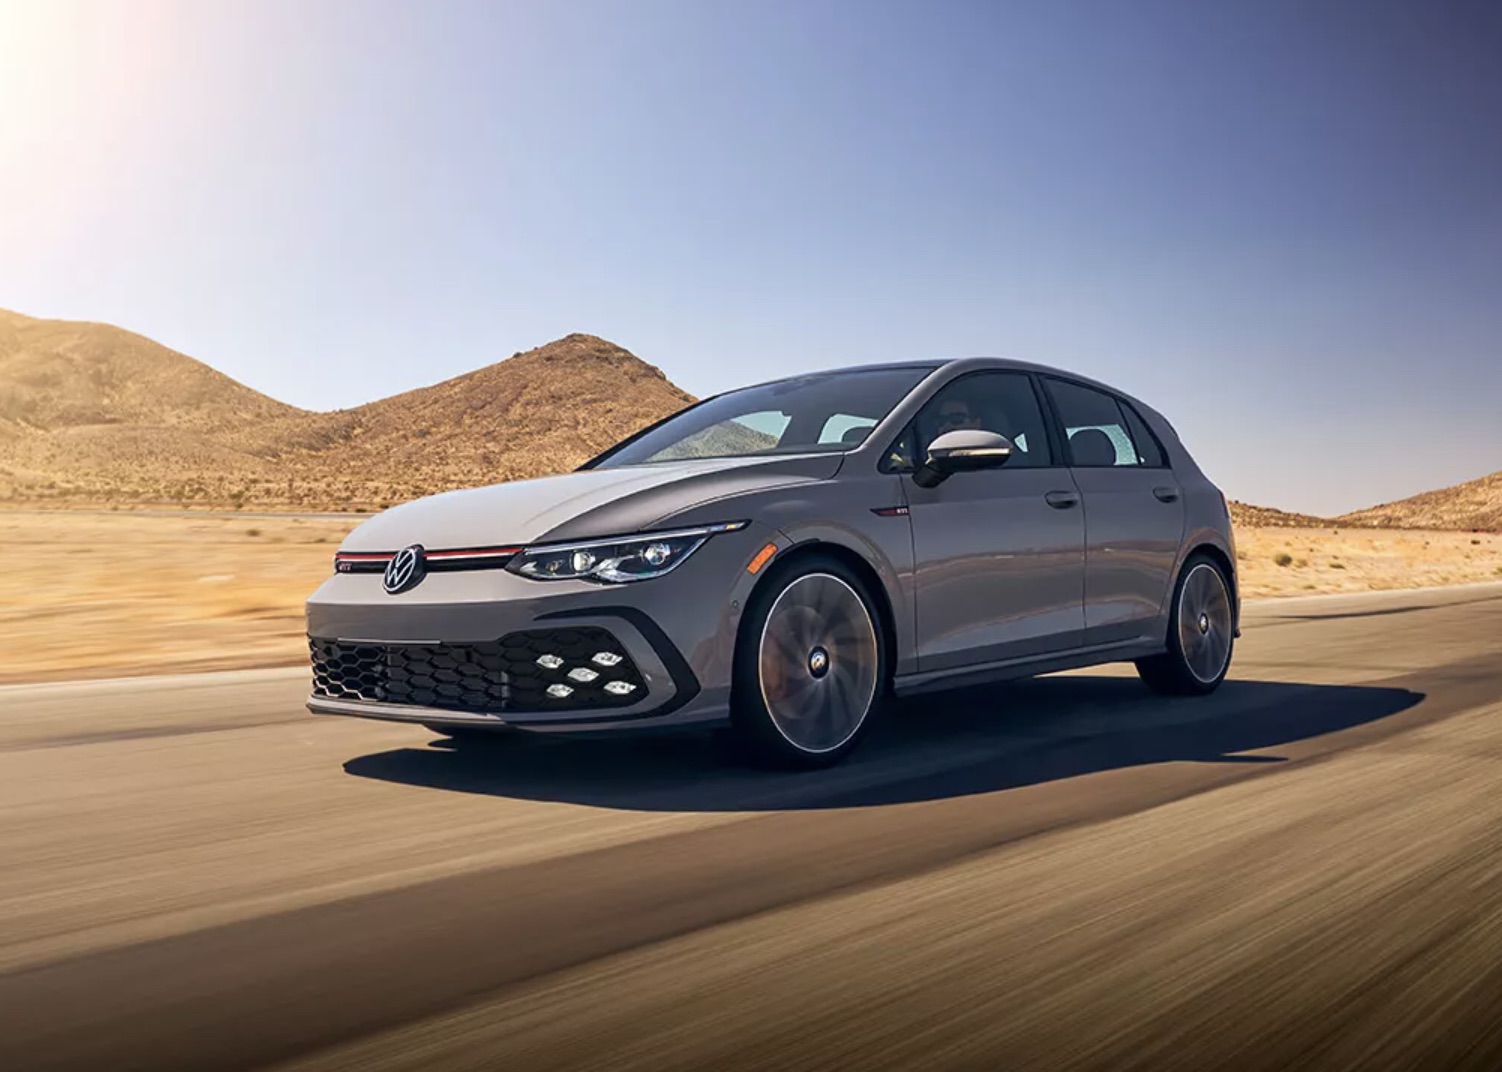 Volkswagen Golf driving at high speeds through the desert.